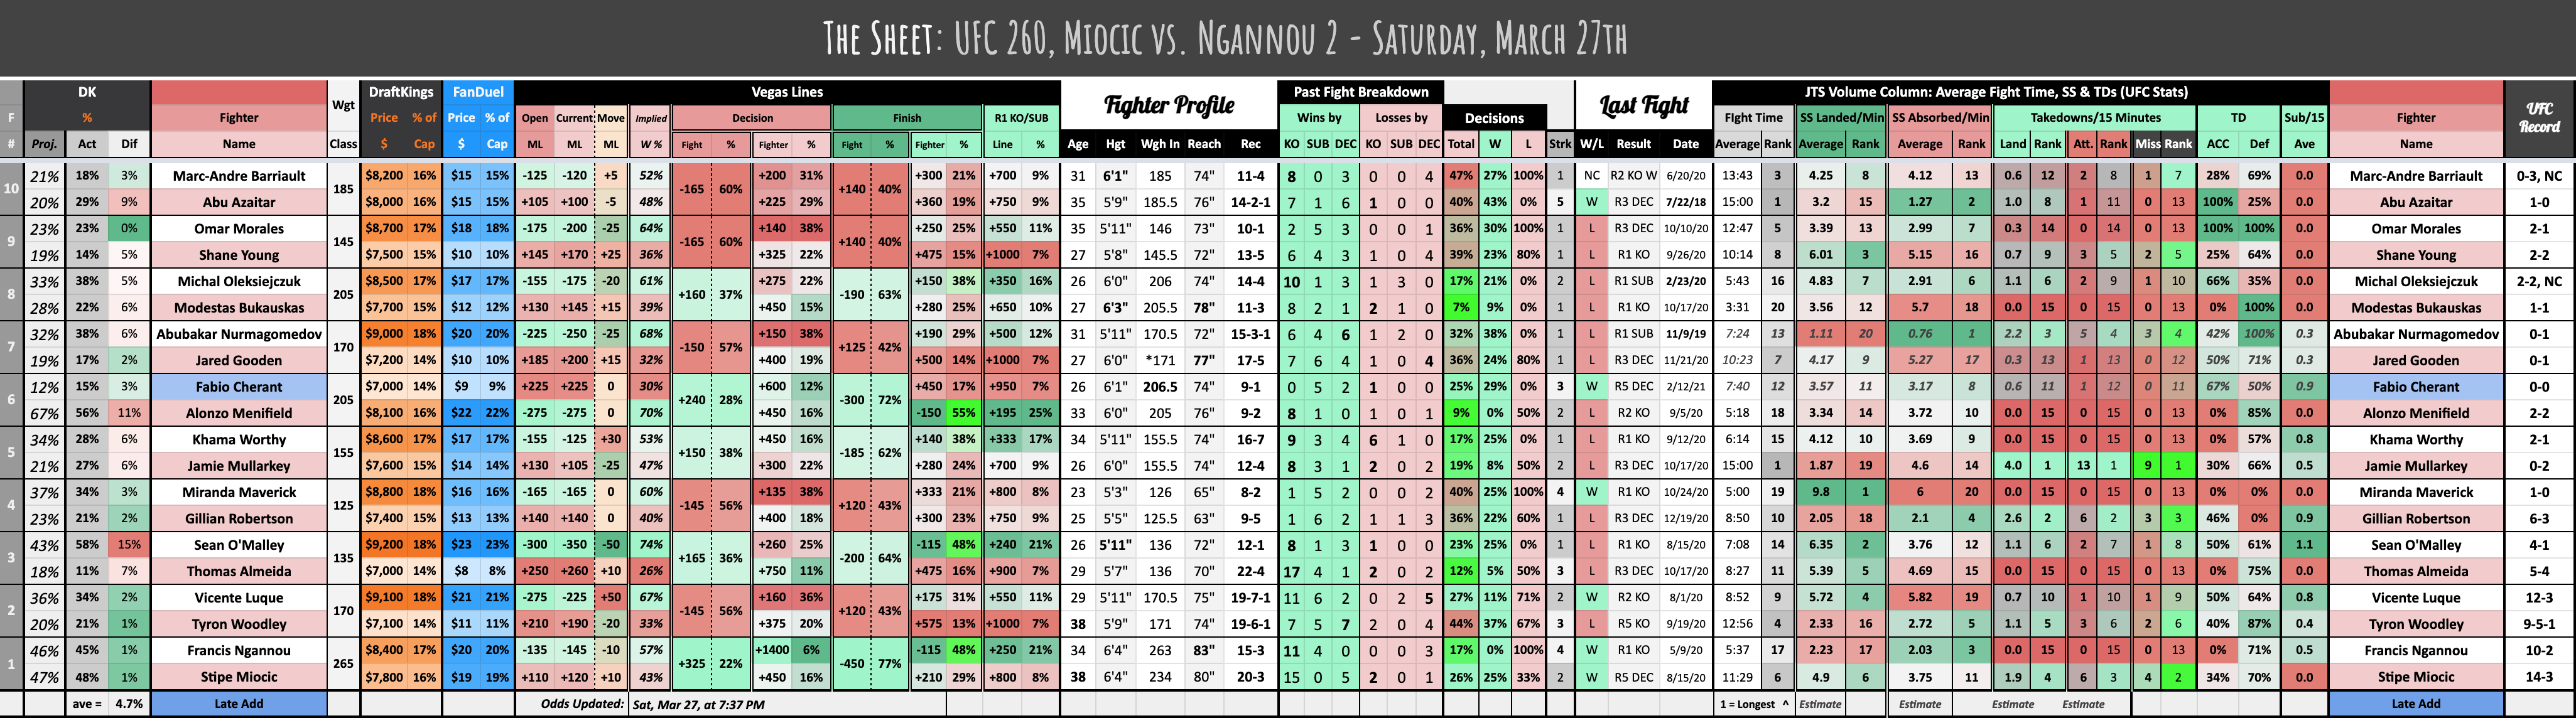 UFC 260, Miocic vs. Ngannou 2 - Saturday, March 27th